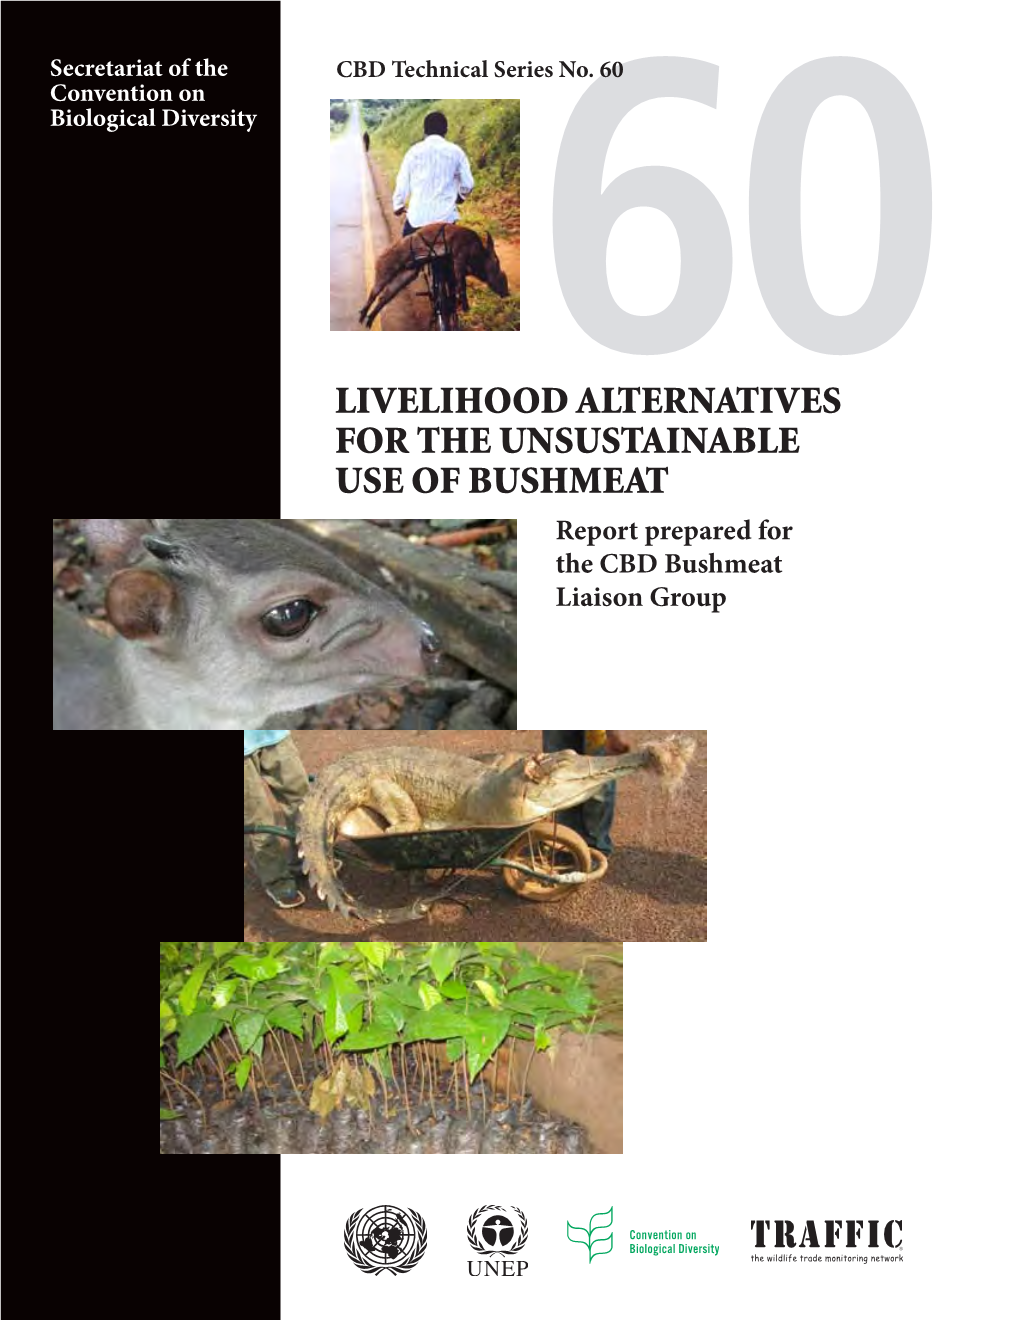 Livelihood Alternatives for the Unsustainable Use of Bushmeat